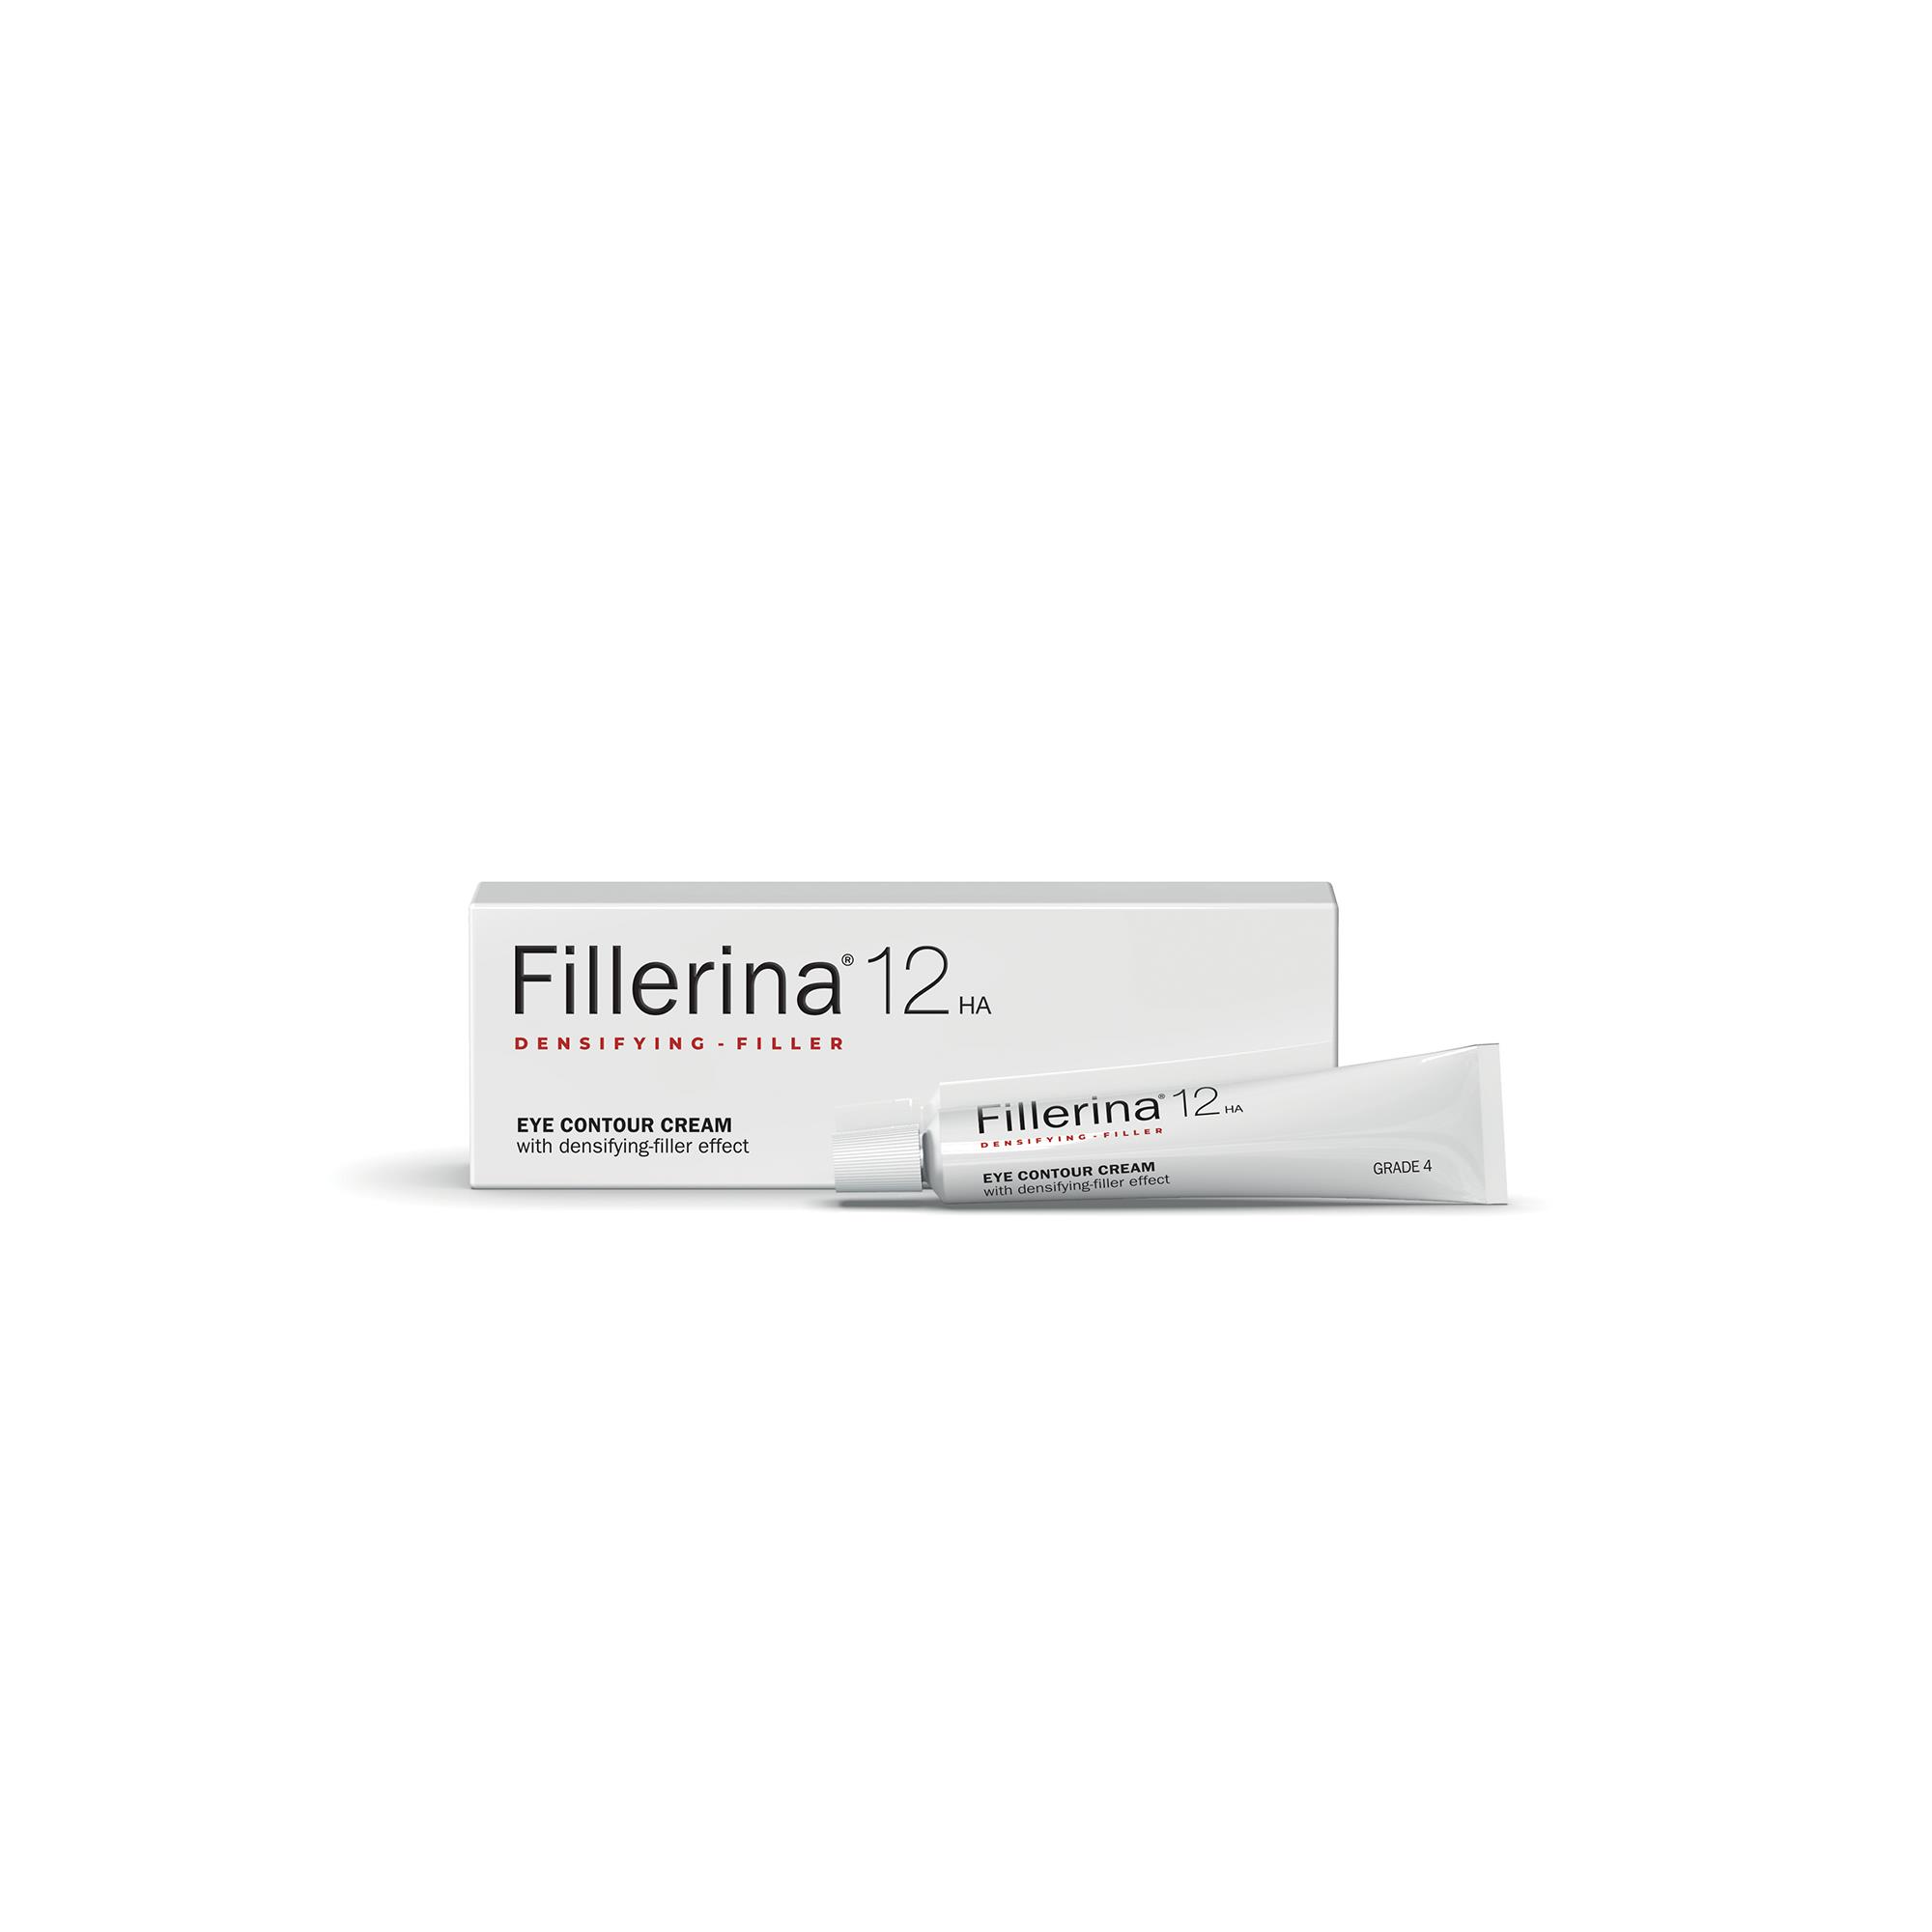 Fillerina 12 Densifying-Filler Eye Contour Cream Grade 4